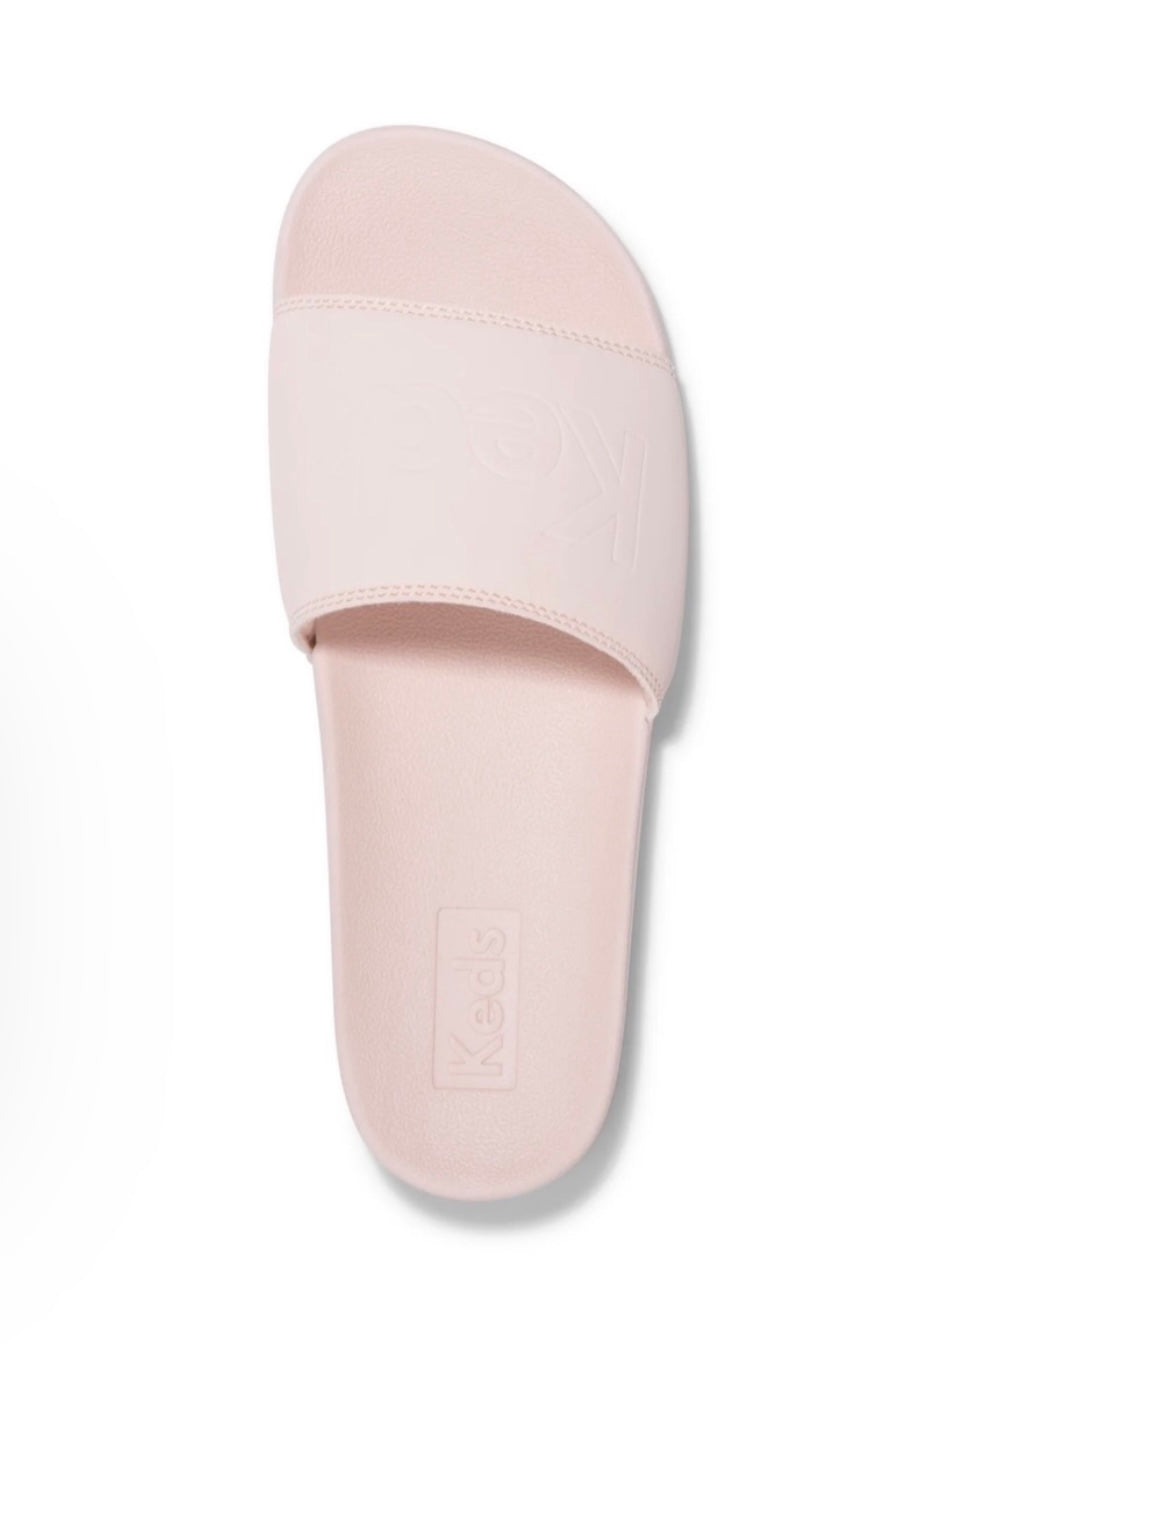 Keds : Dream Slides : Blush Pink